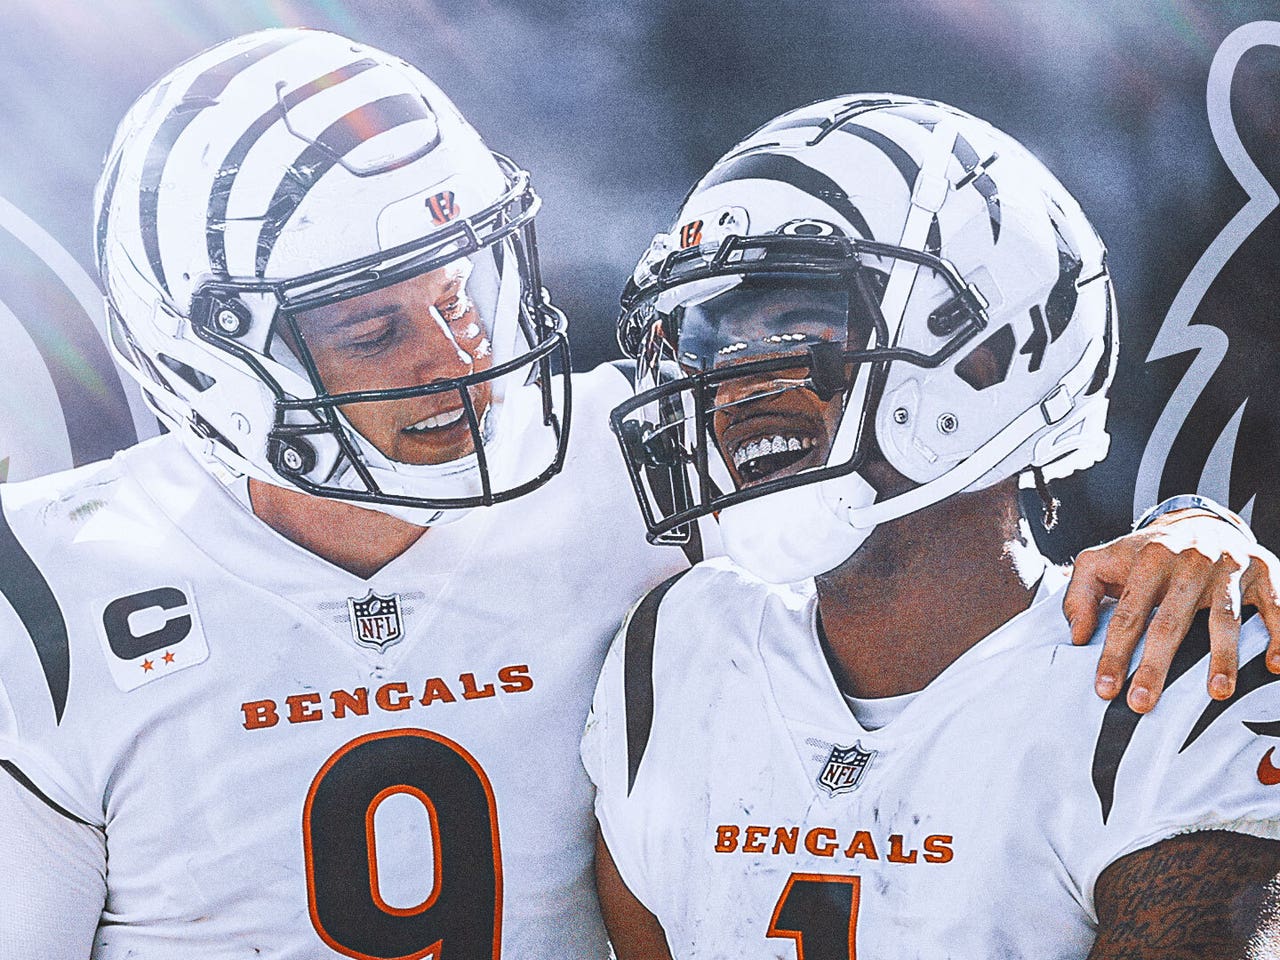 Cincinnati Bengals to wear alternate white helmets in 2022